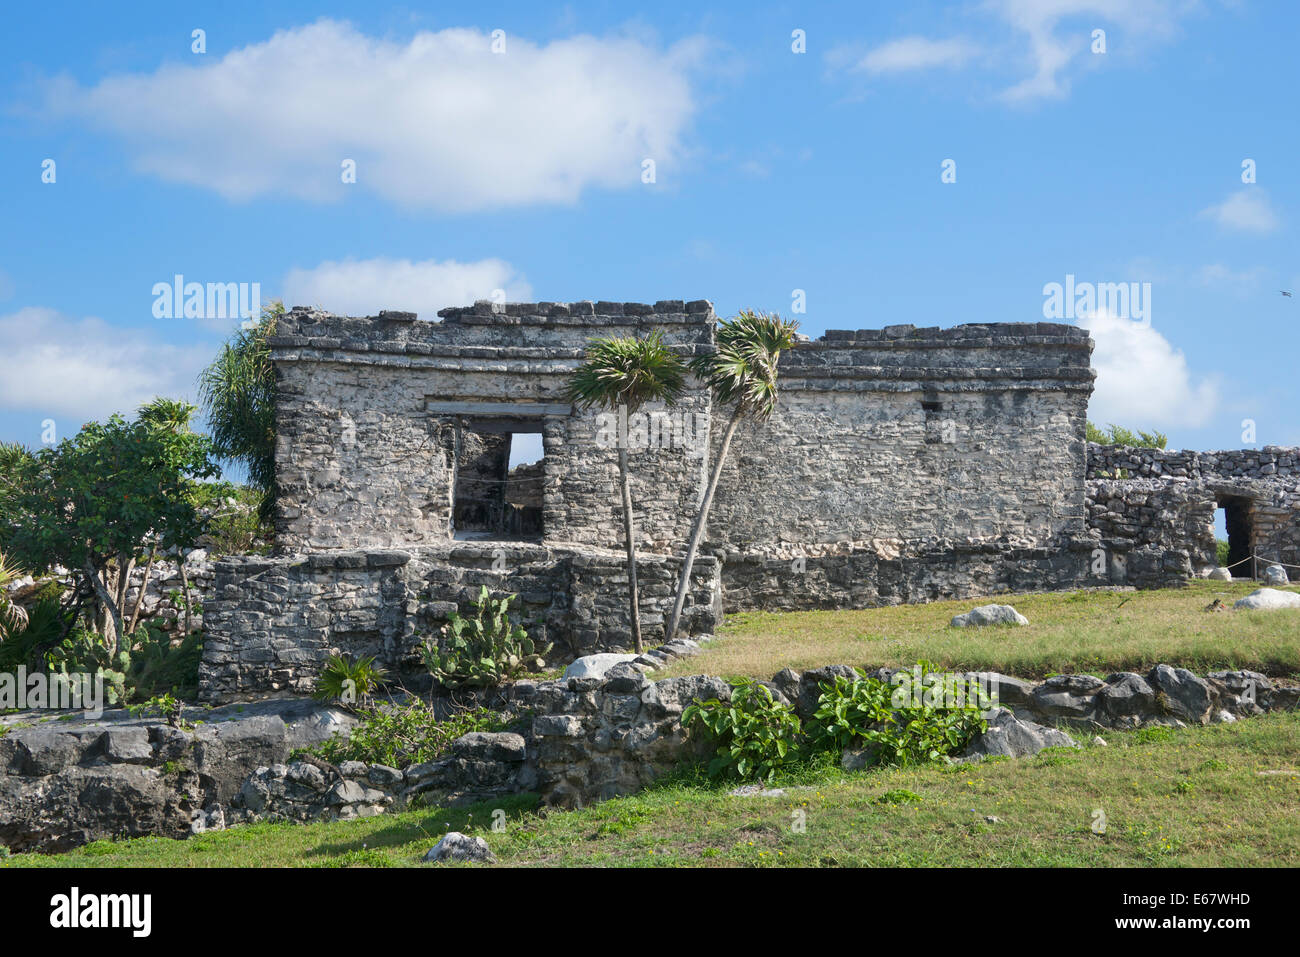 House of the Cenote Tulum Yucatan Mexico Stock Photo